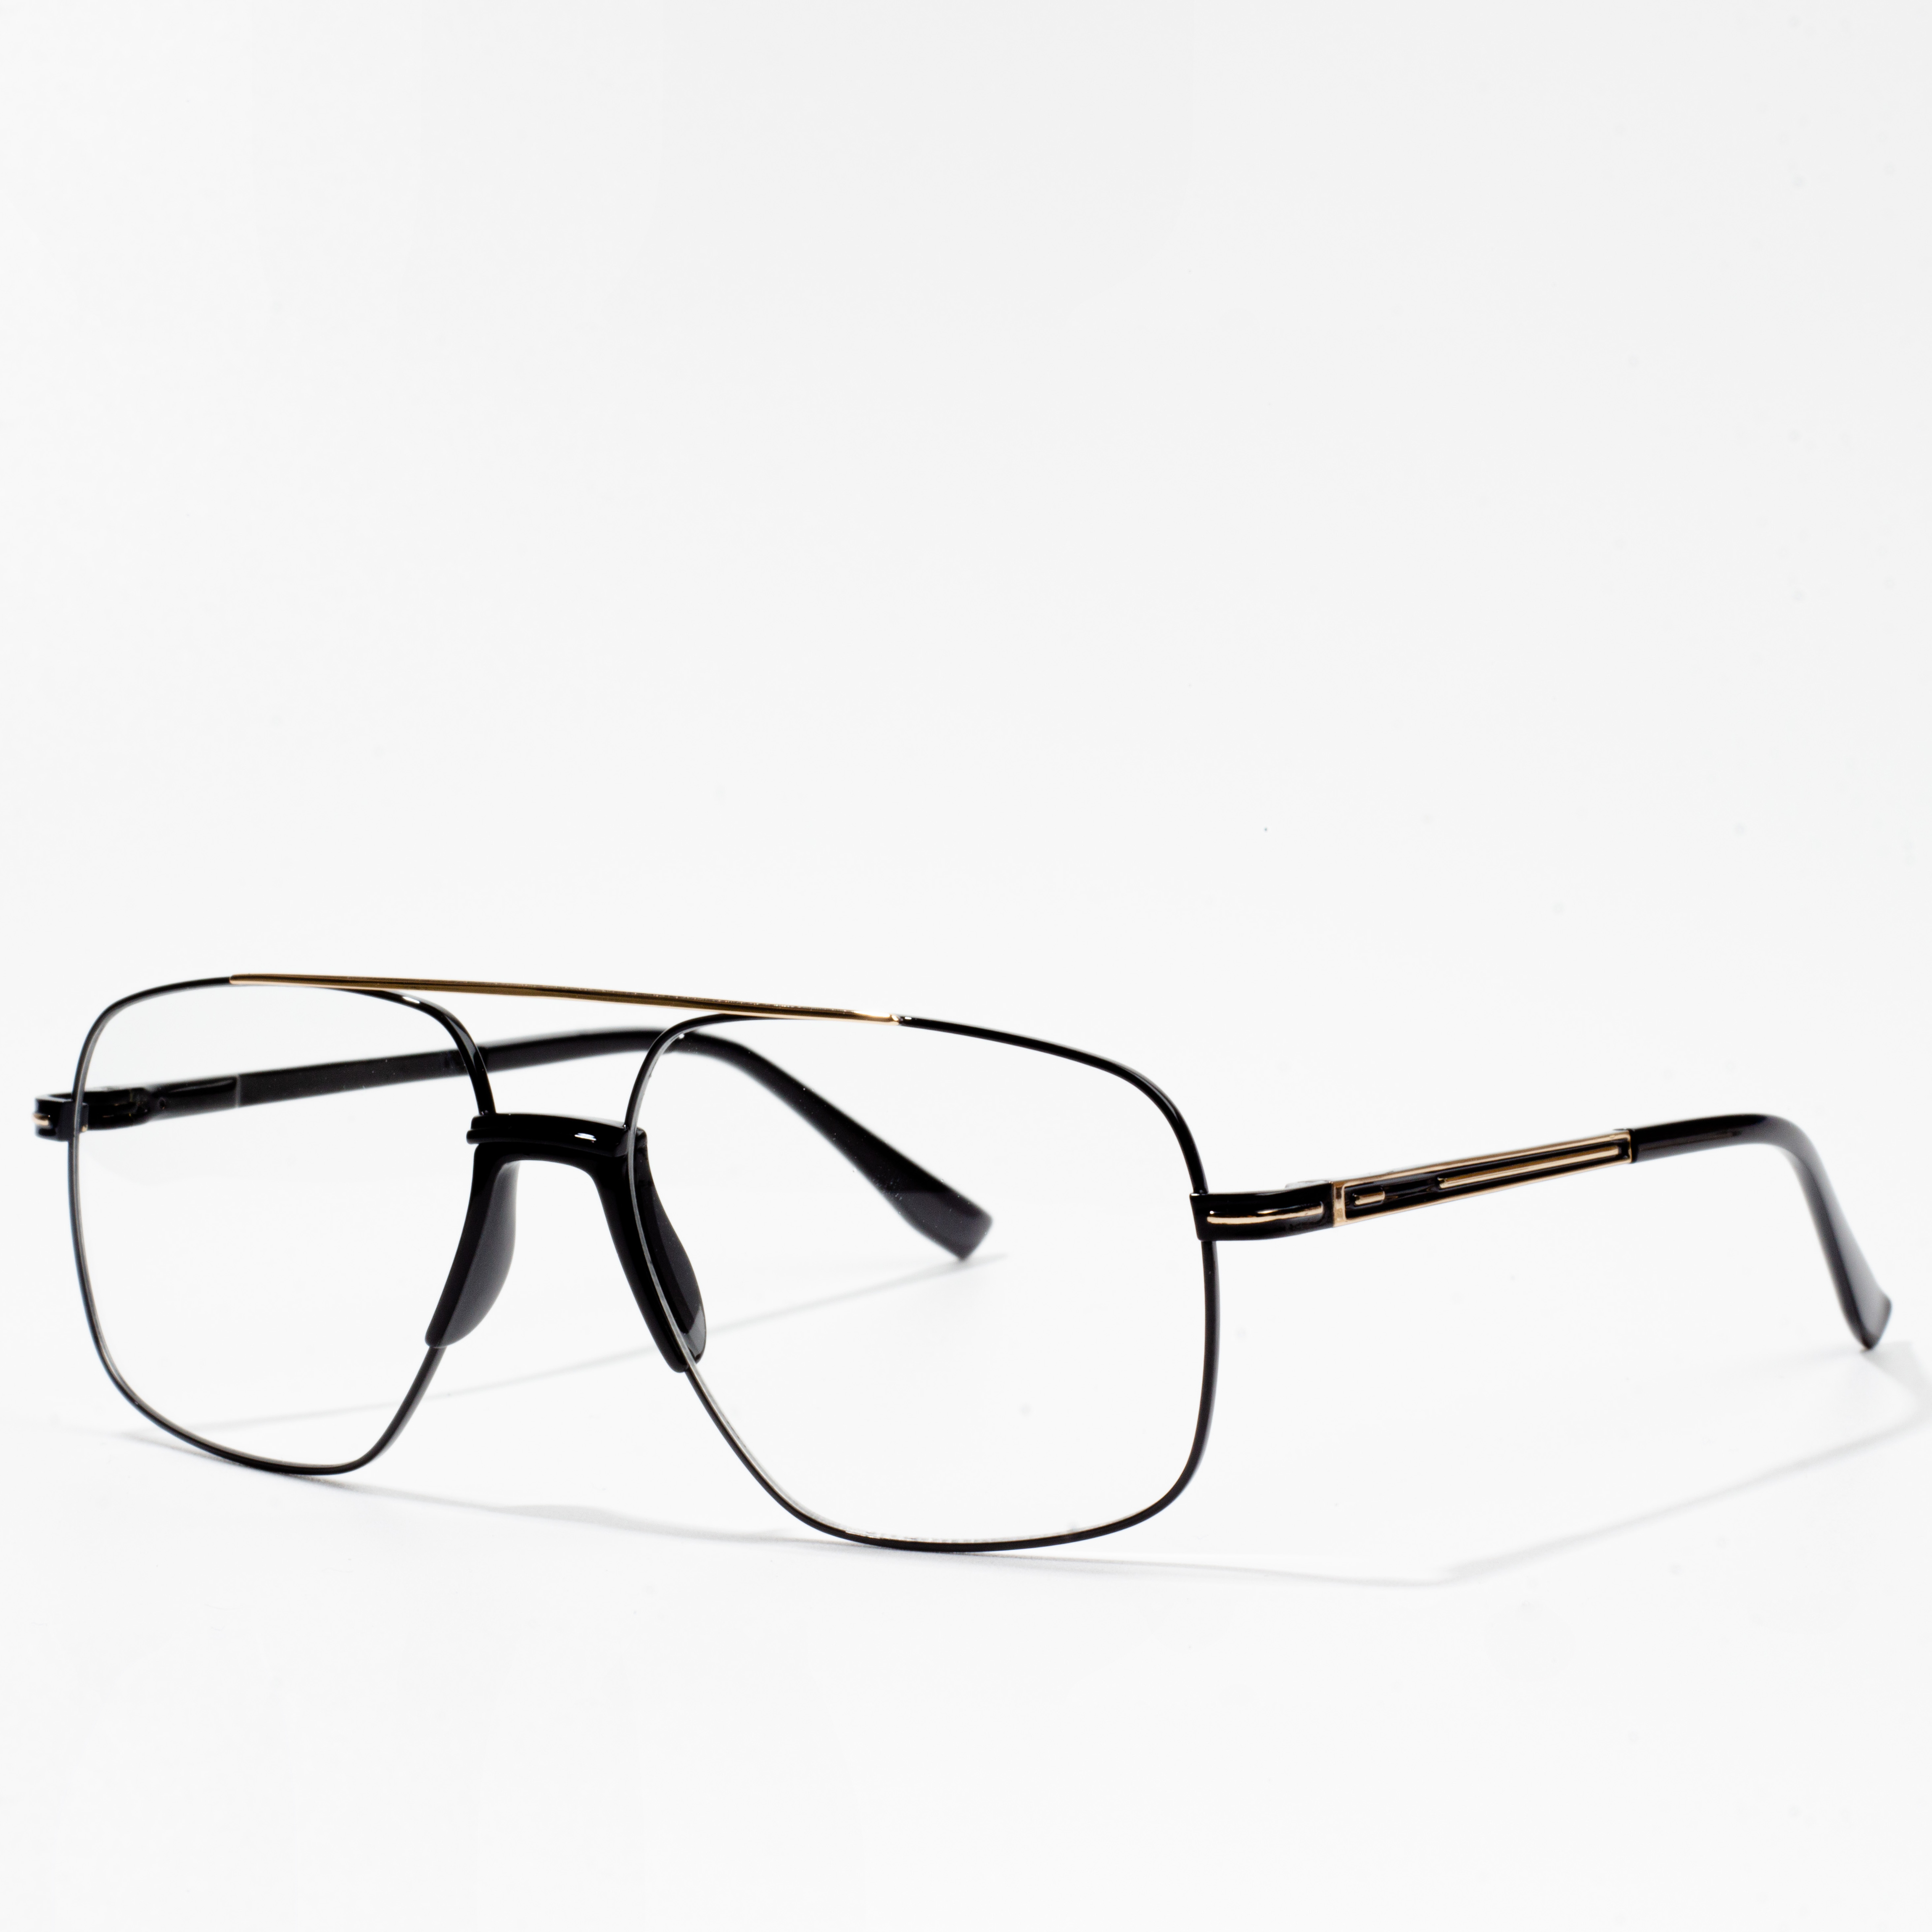 fashion eyeglasses frame 